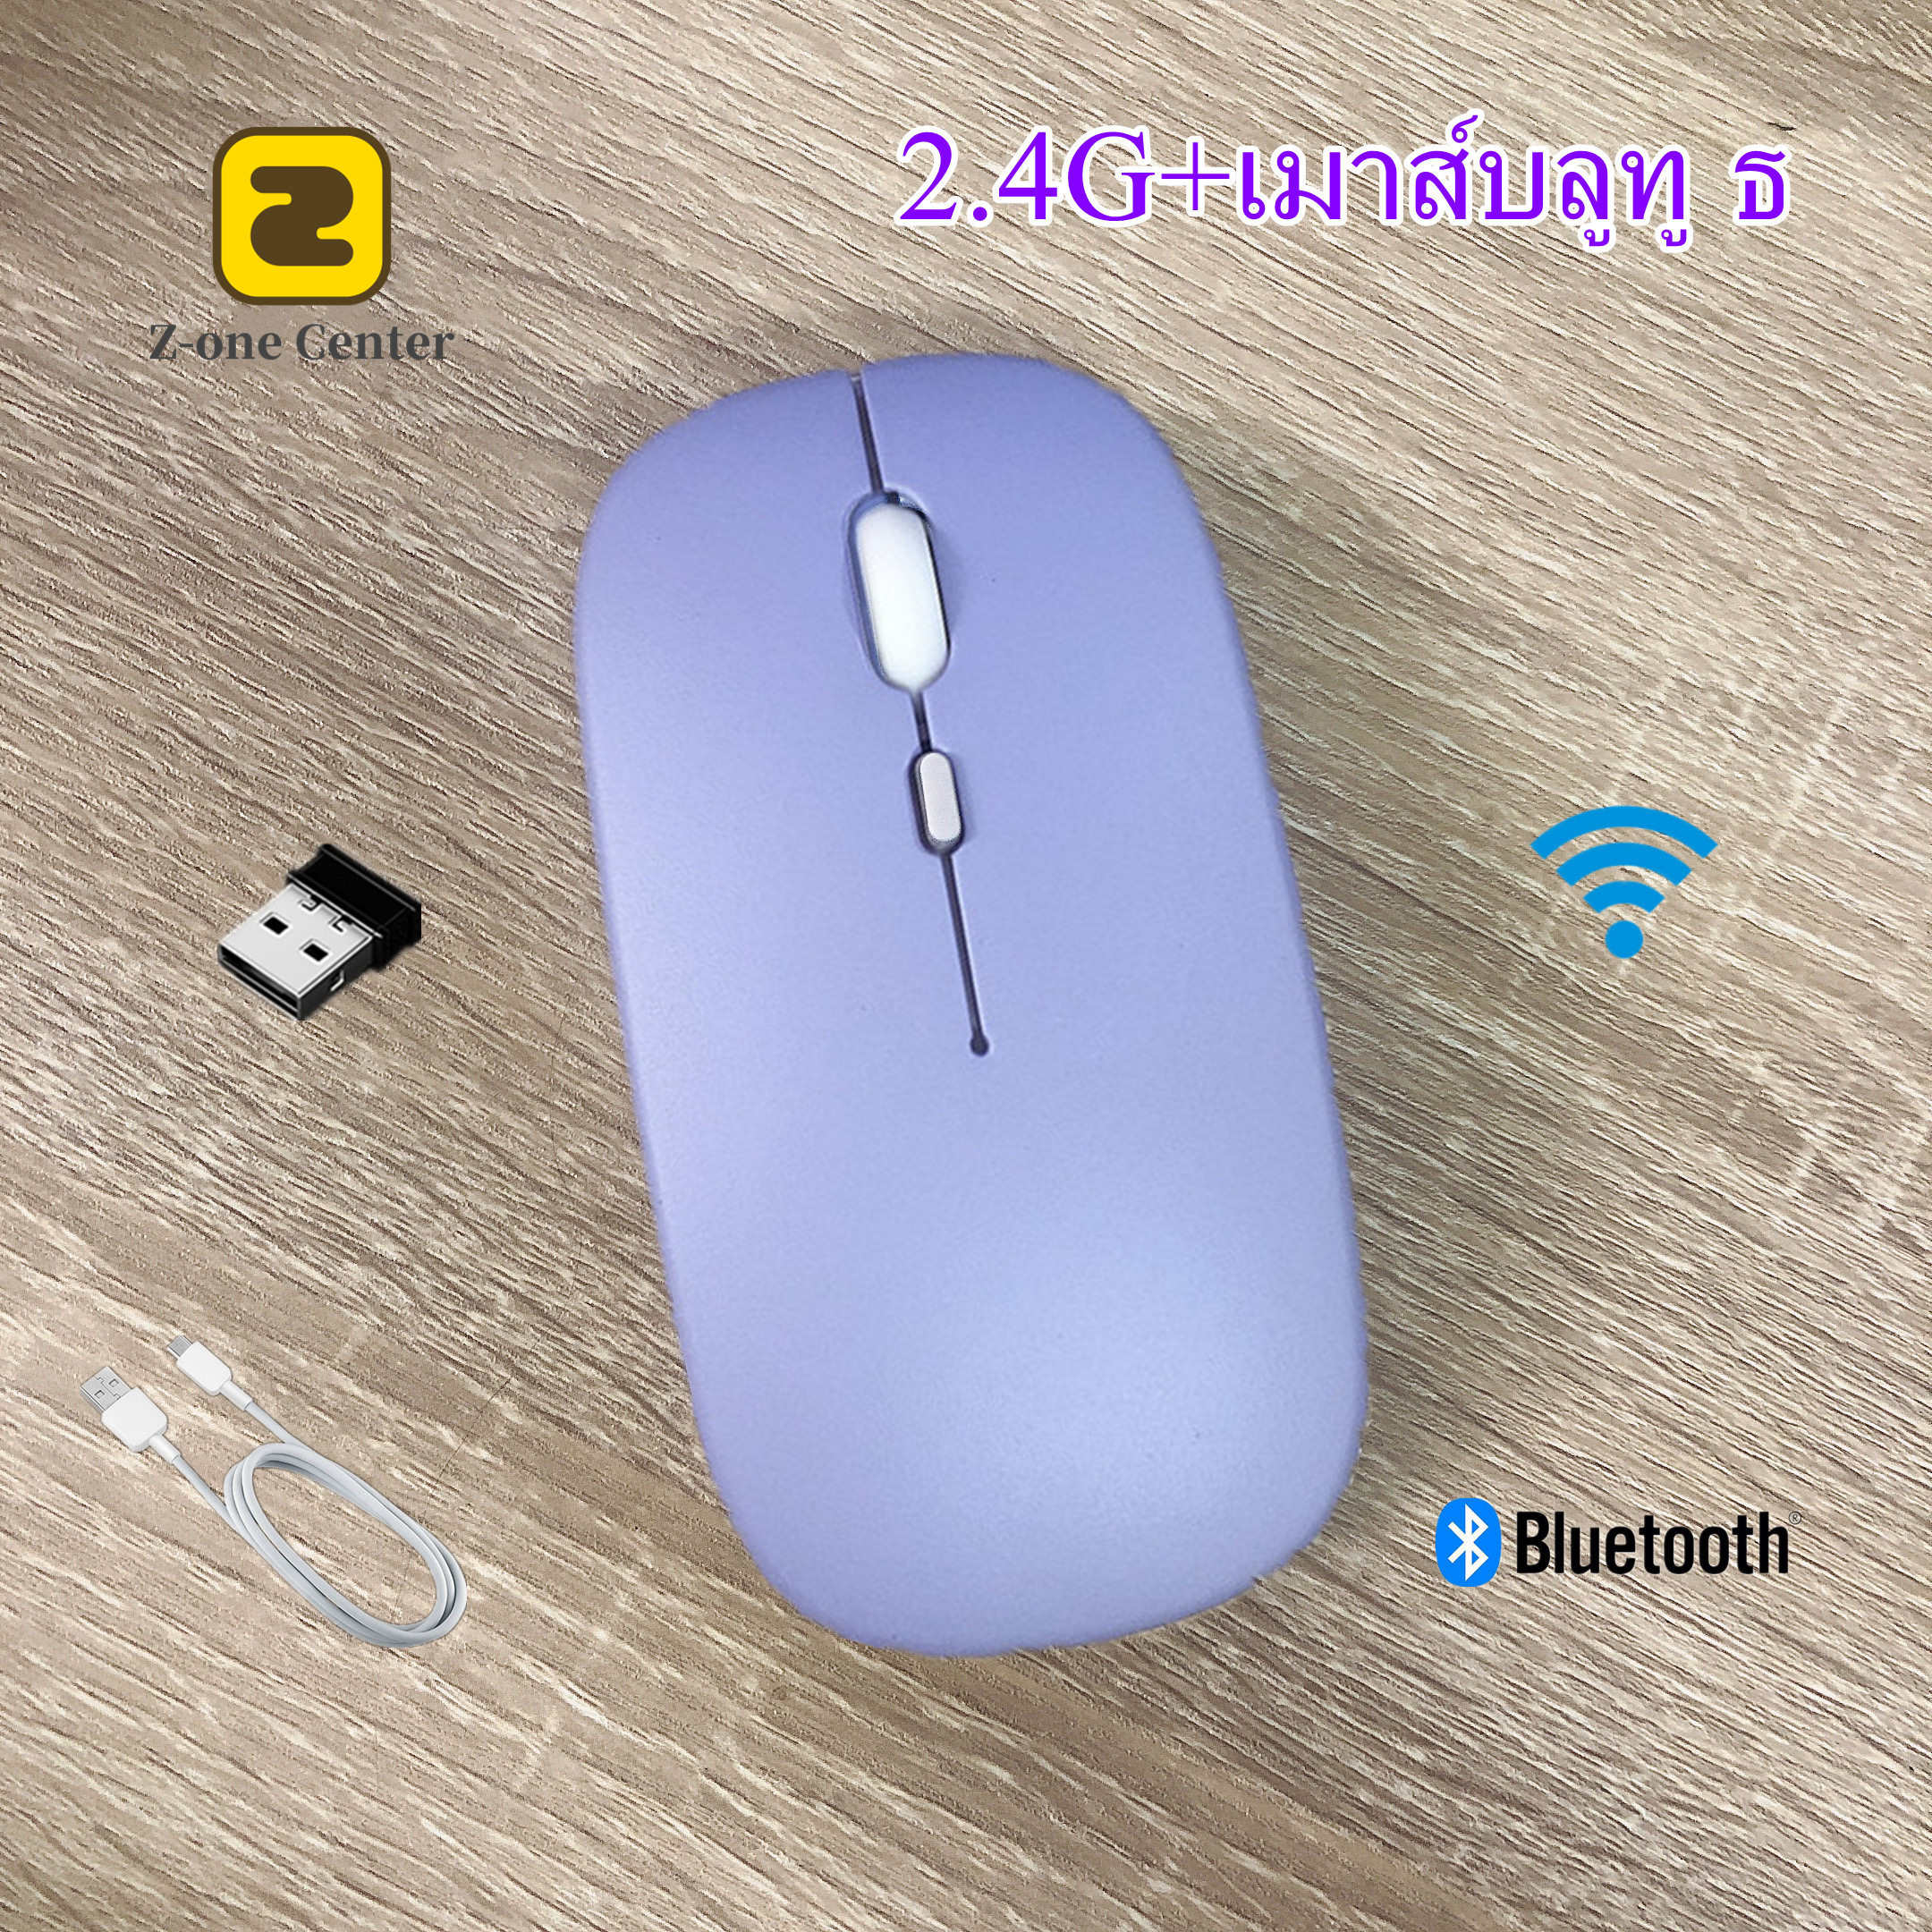 [hเมาส์ไร้สาย/เมาส์บลูทู ธ ไร้สาย] Inphic Mi (มีแบตในตัว) (ปุ่มเงียบ) (มีปุ่มปรับความไวเมาส์ DPI 1000-1600) มี (Premium Optical Light ใช้งานได้เกือบทุกสภาพผิว) Rechargeable Wireless Mouse MI